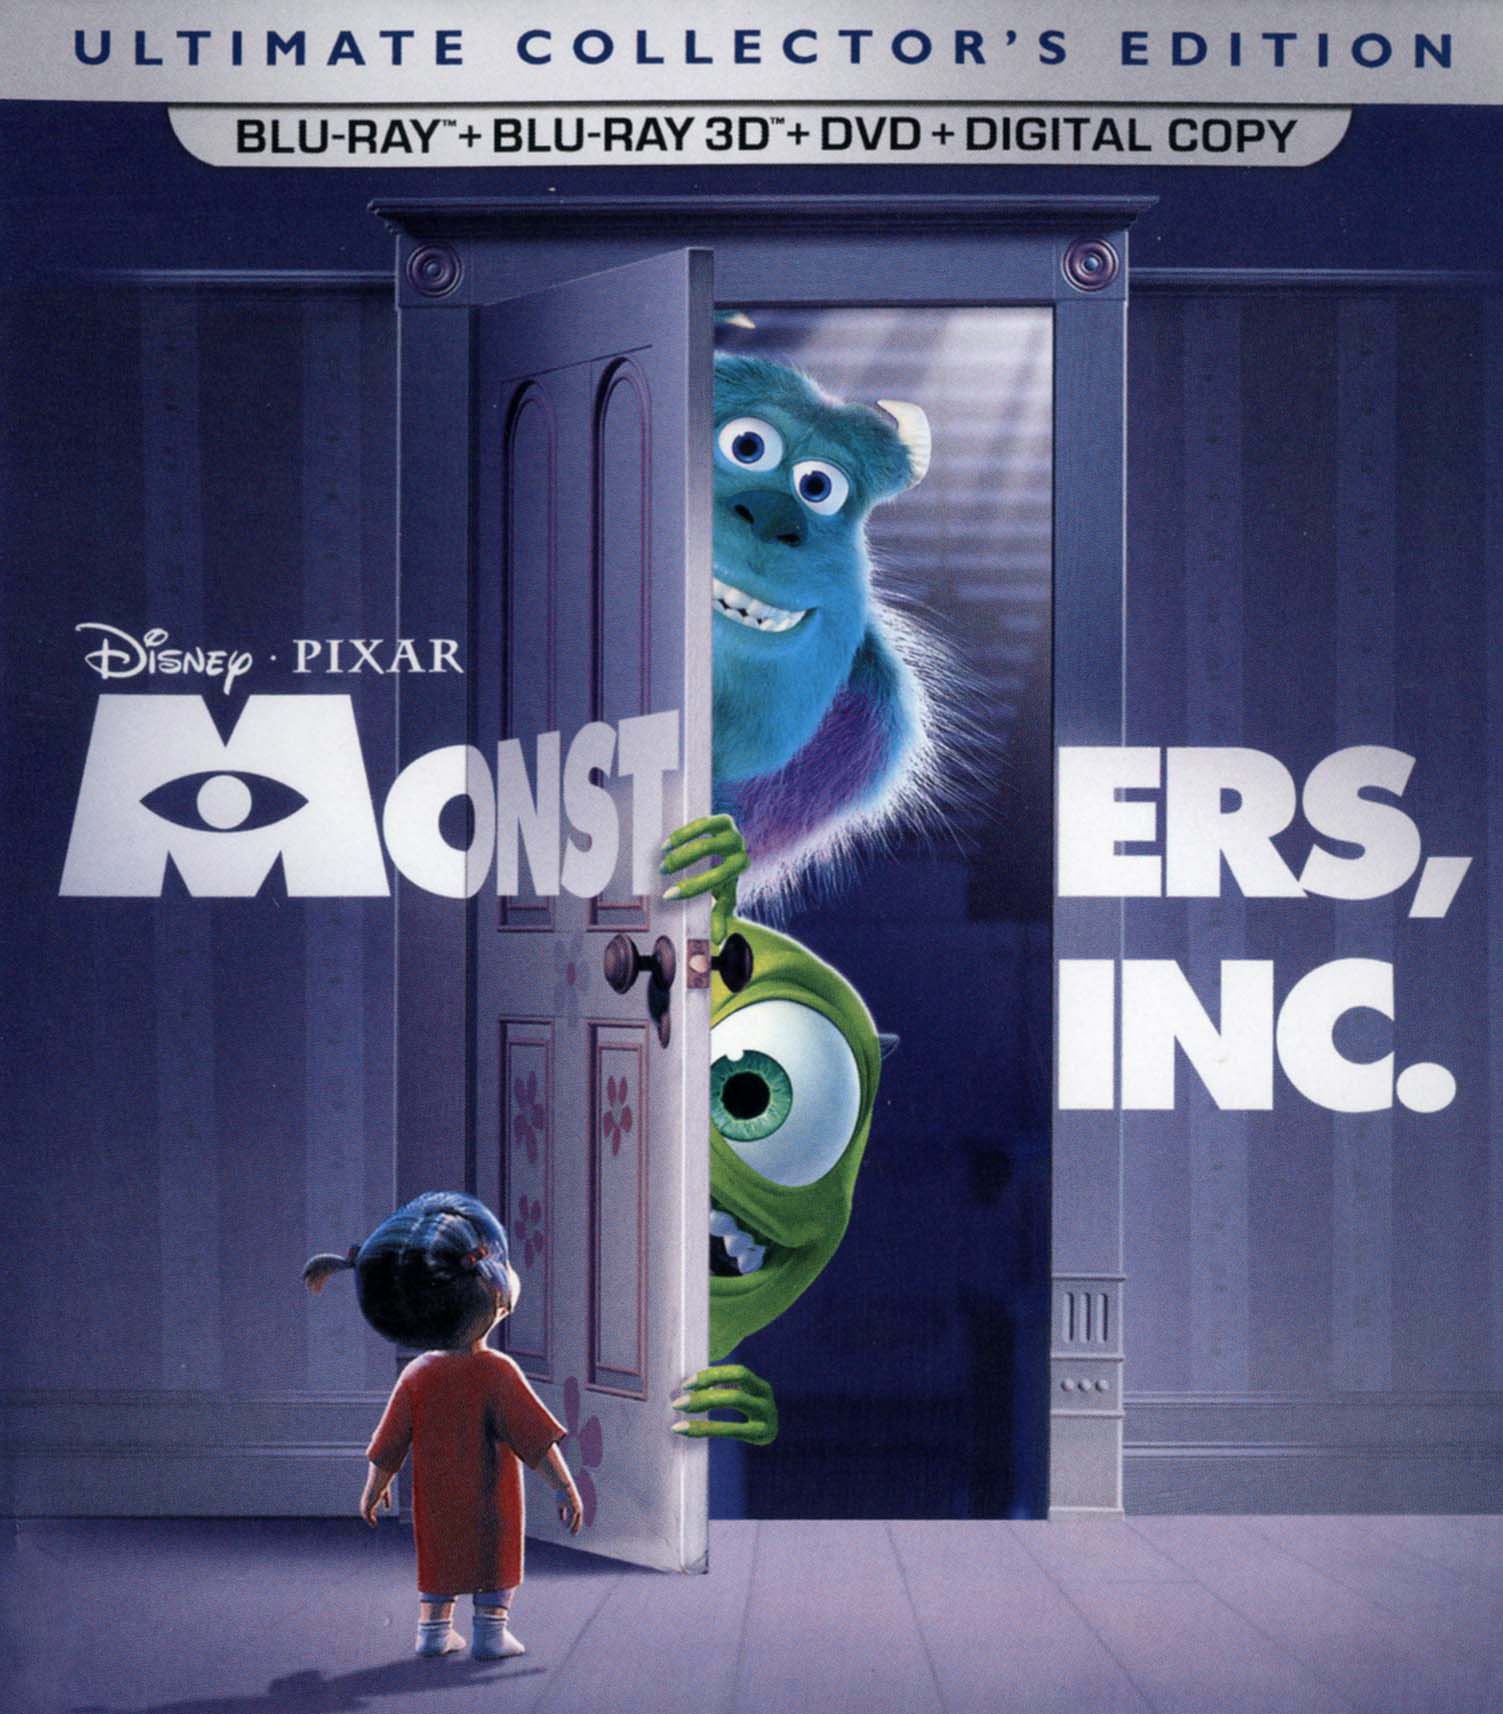 Monsters, Inc. [Includes Digital Copy] [Blu-ray/DVD] [2001] - Best Buy